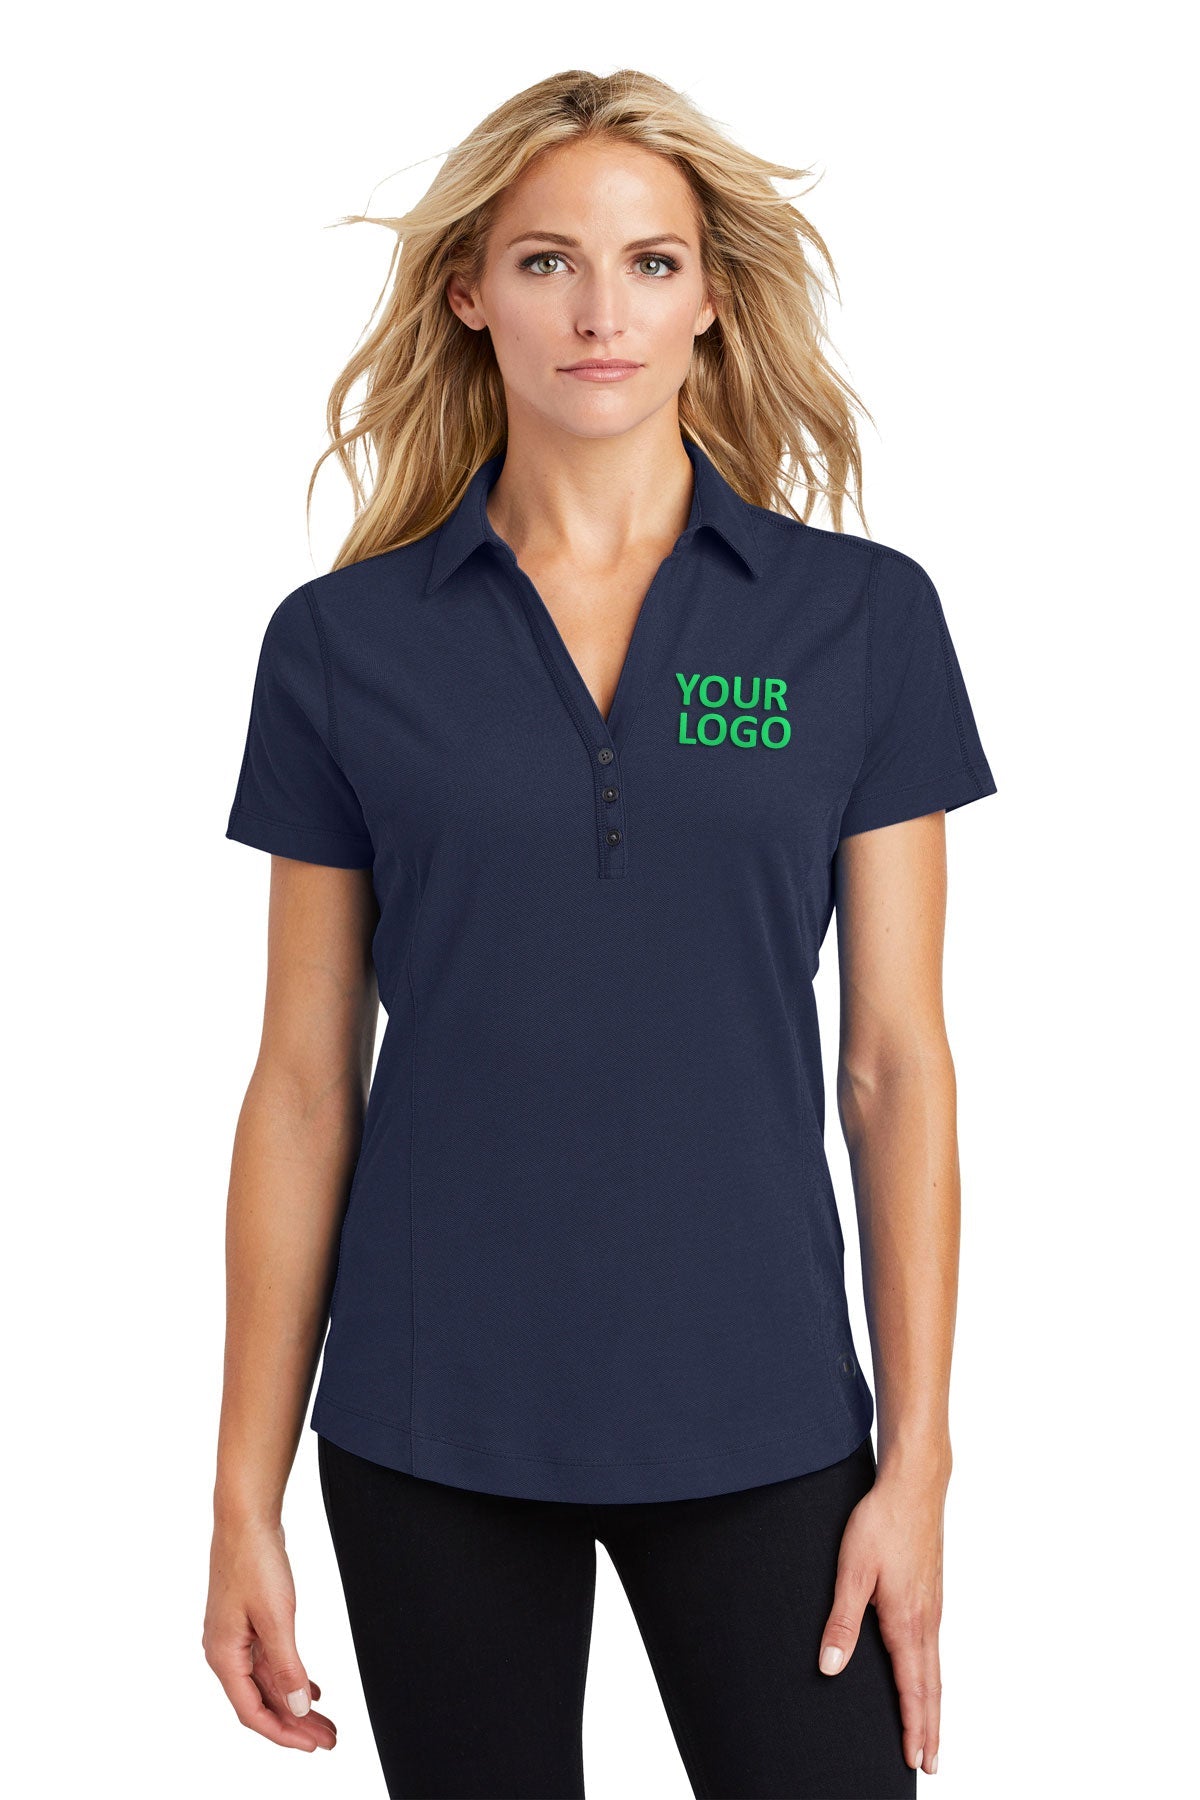 OGIO Navy LOG126 polo work shirts with company logo